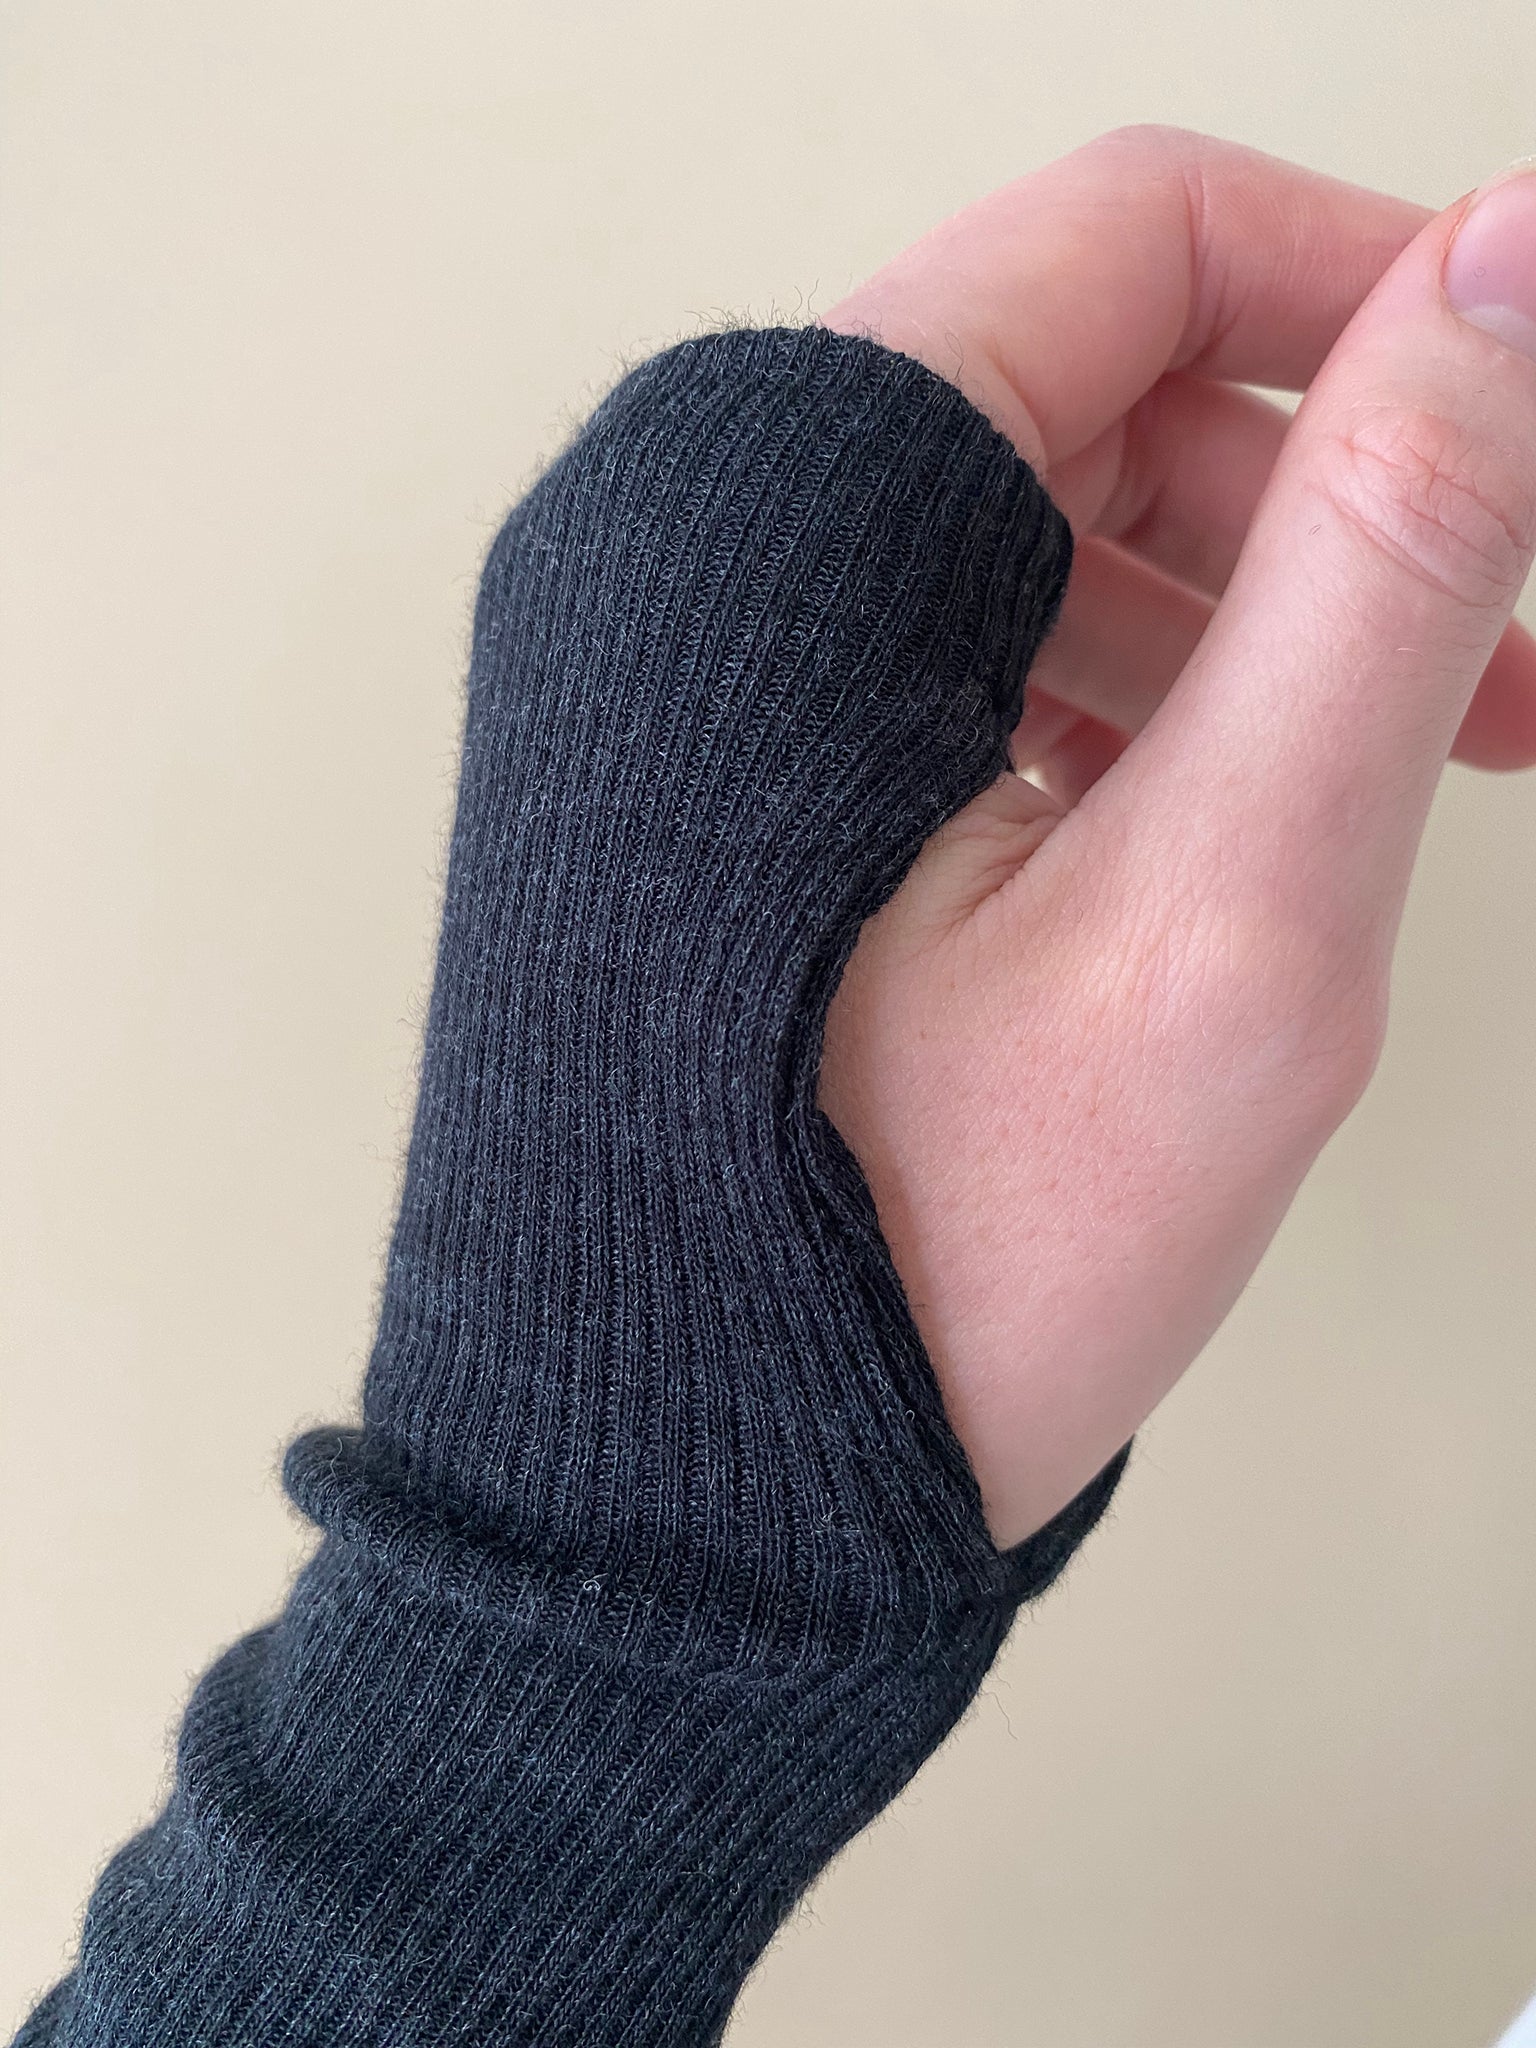 A.49 Charcoal Merino Wool Hand Warmers